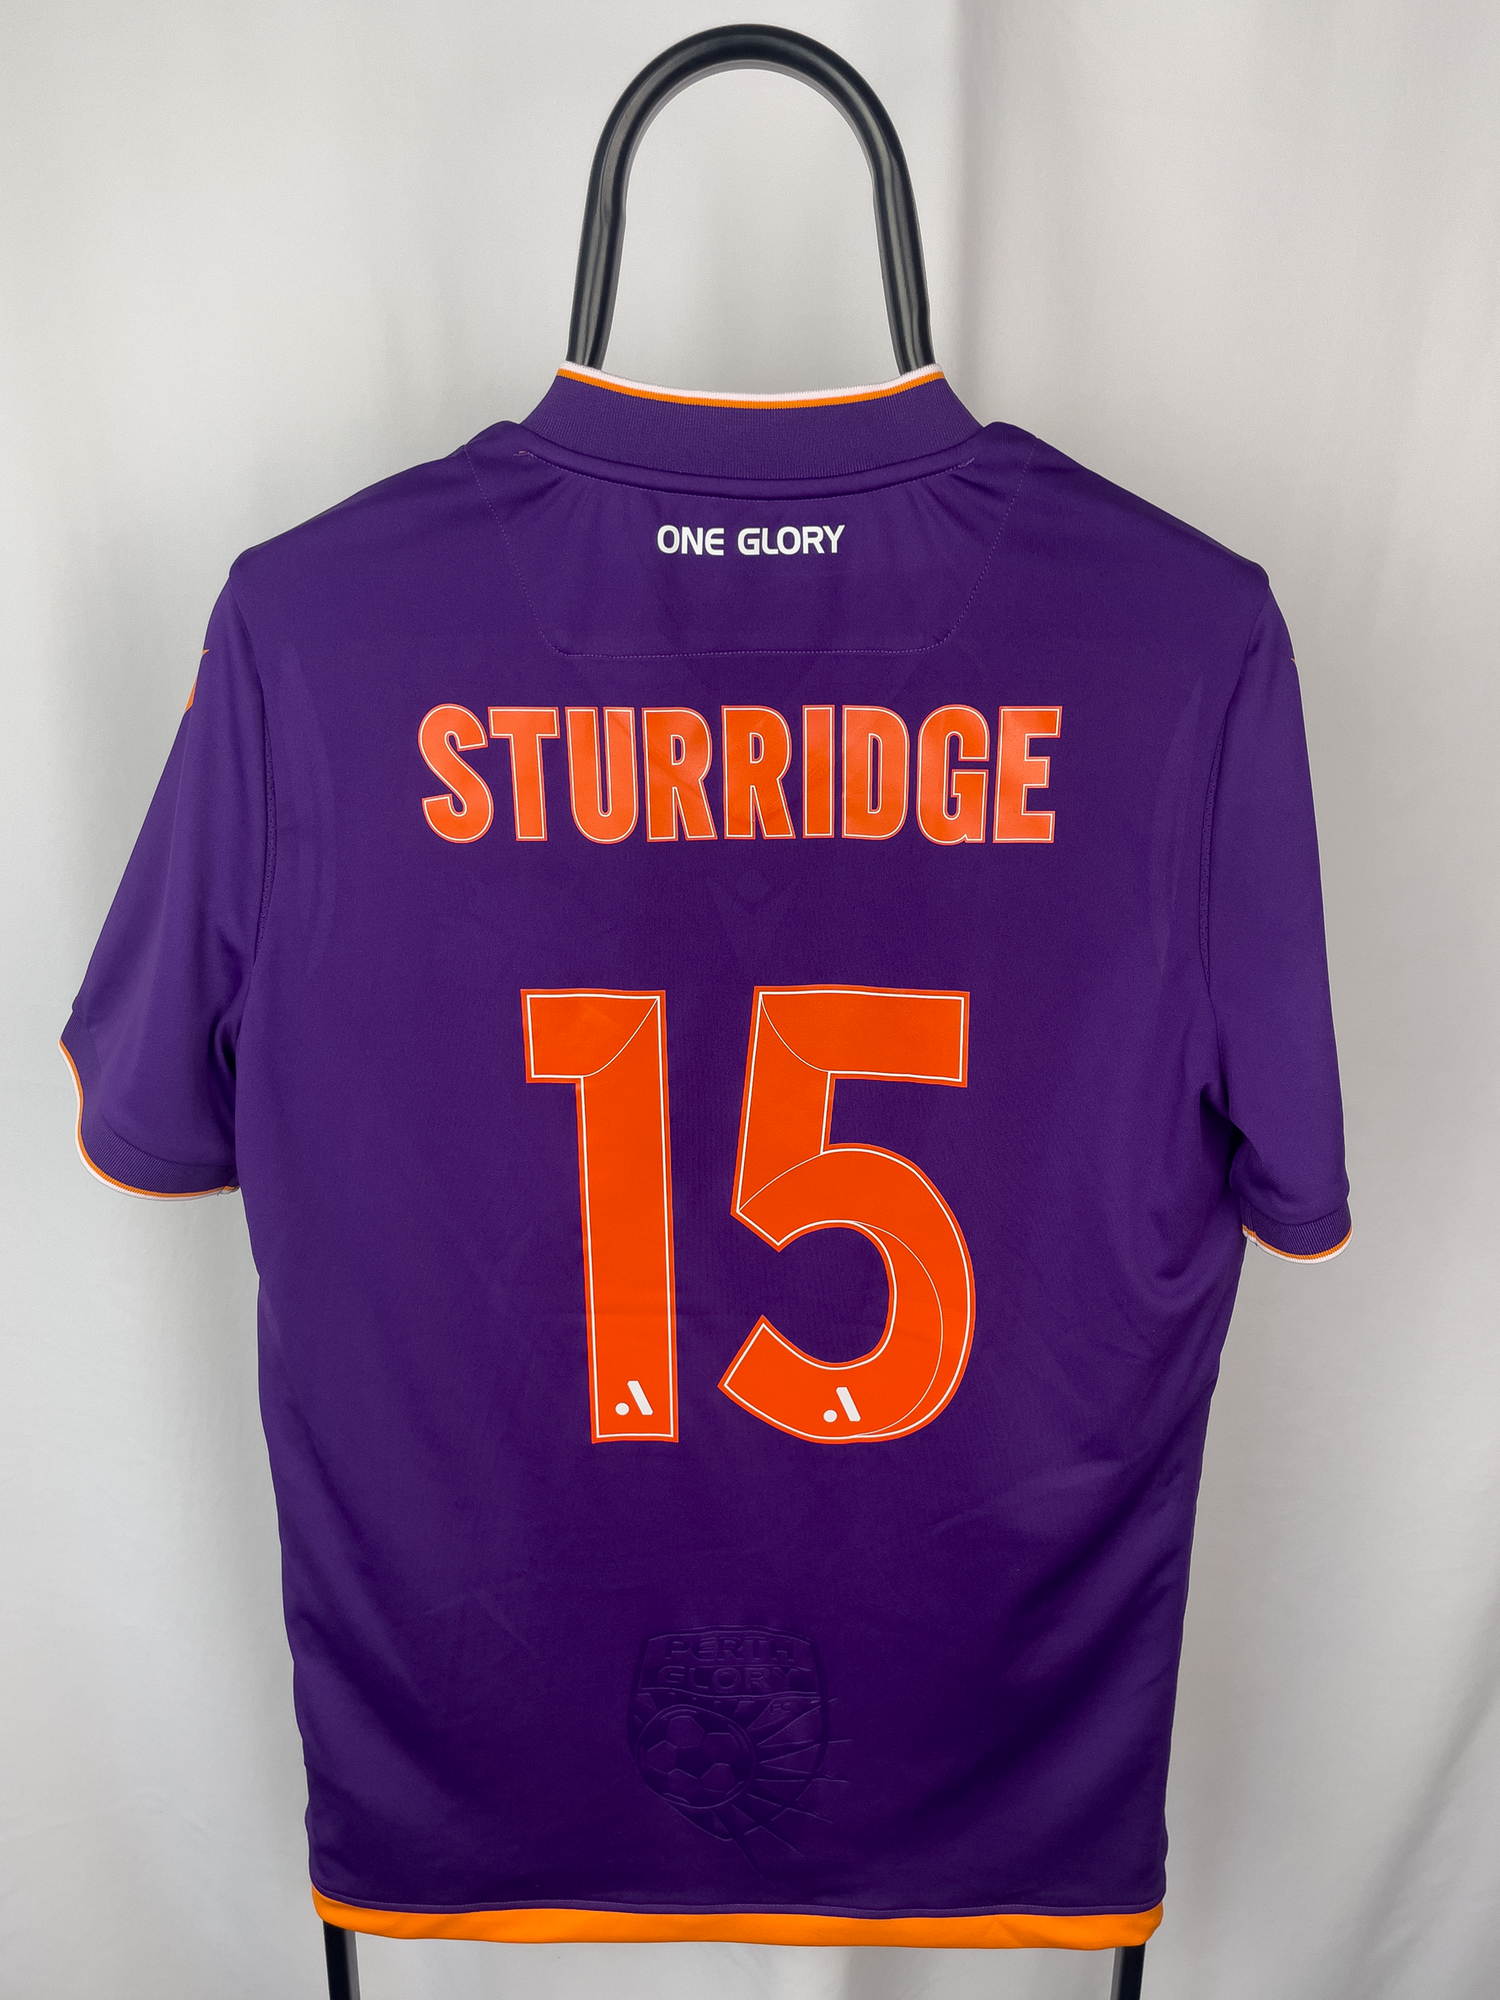 Daniel Sturridge Perth Glory 21/22 hjemmebanetrøje - M